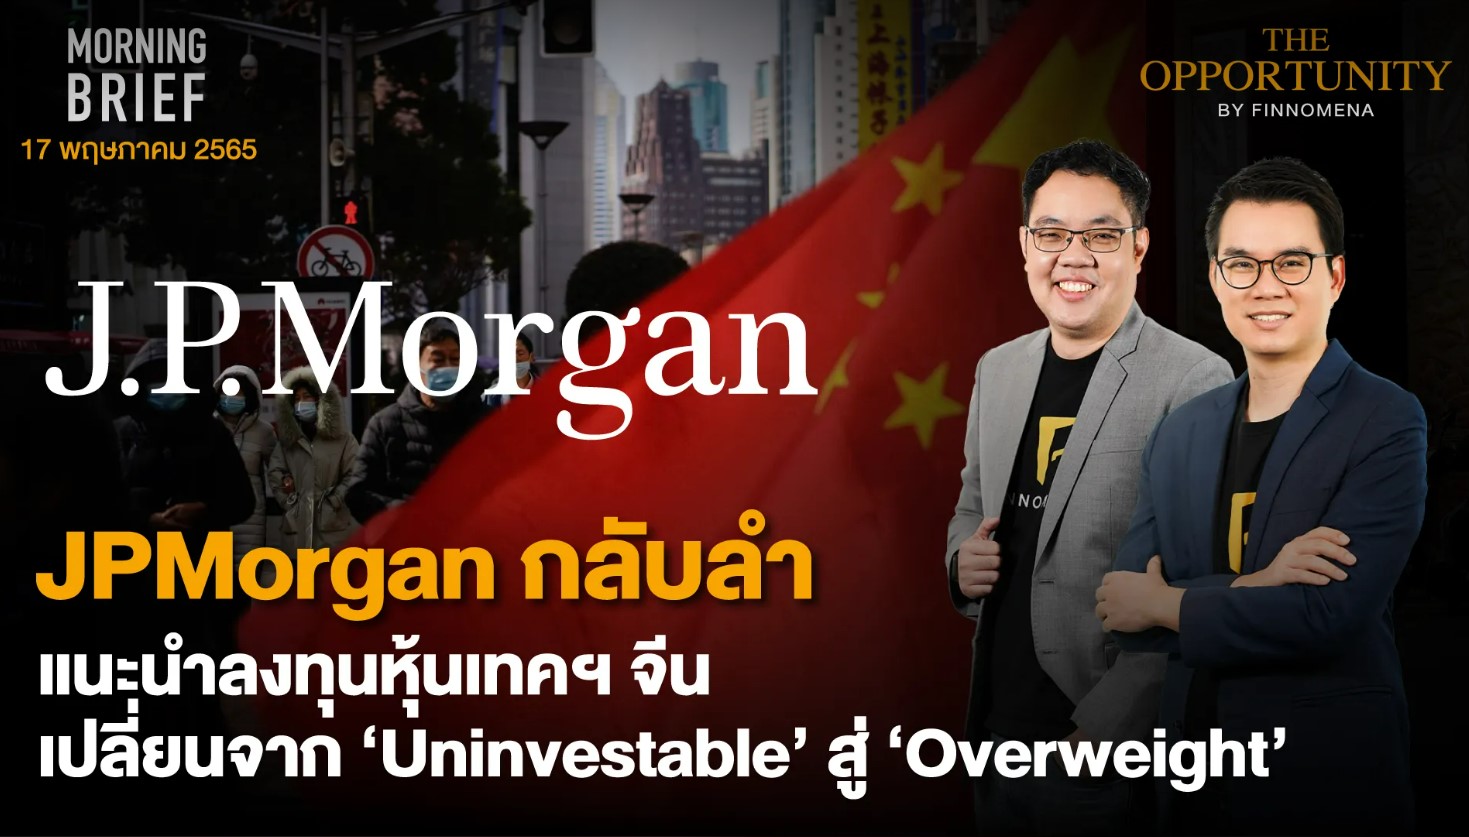 FINNOMENA The Opportunity Morning Brief 17/05/2022 “JPMorgan กลับลำ แนะนำลงทุนหุ้นเทคฯ จีน เปลี่ยนจาก ‘Uninvestable’ สู่ ‘Overweight’ ” พร้อมสรุปเนื้อหา